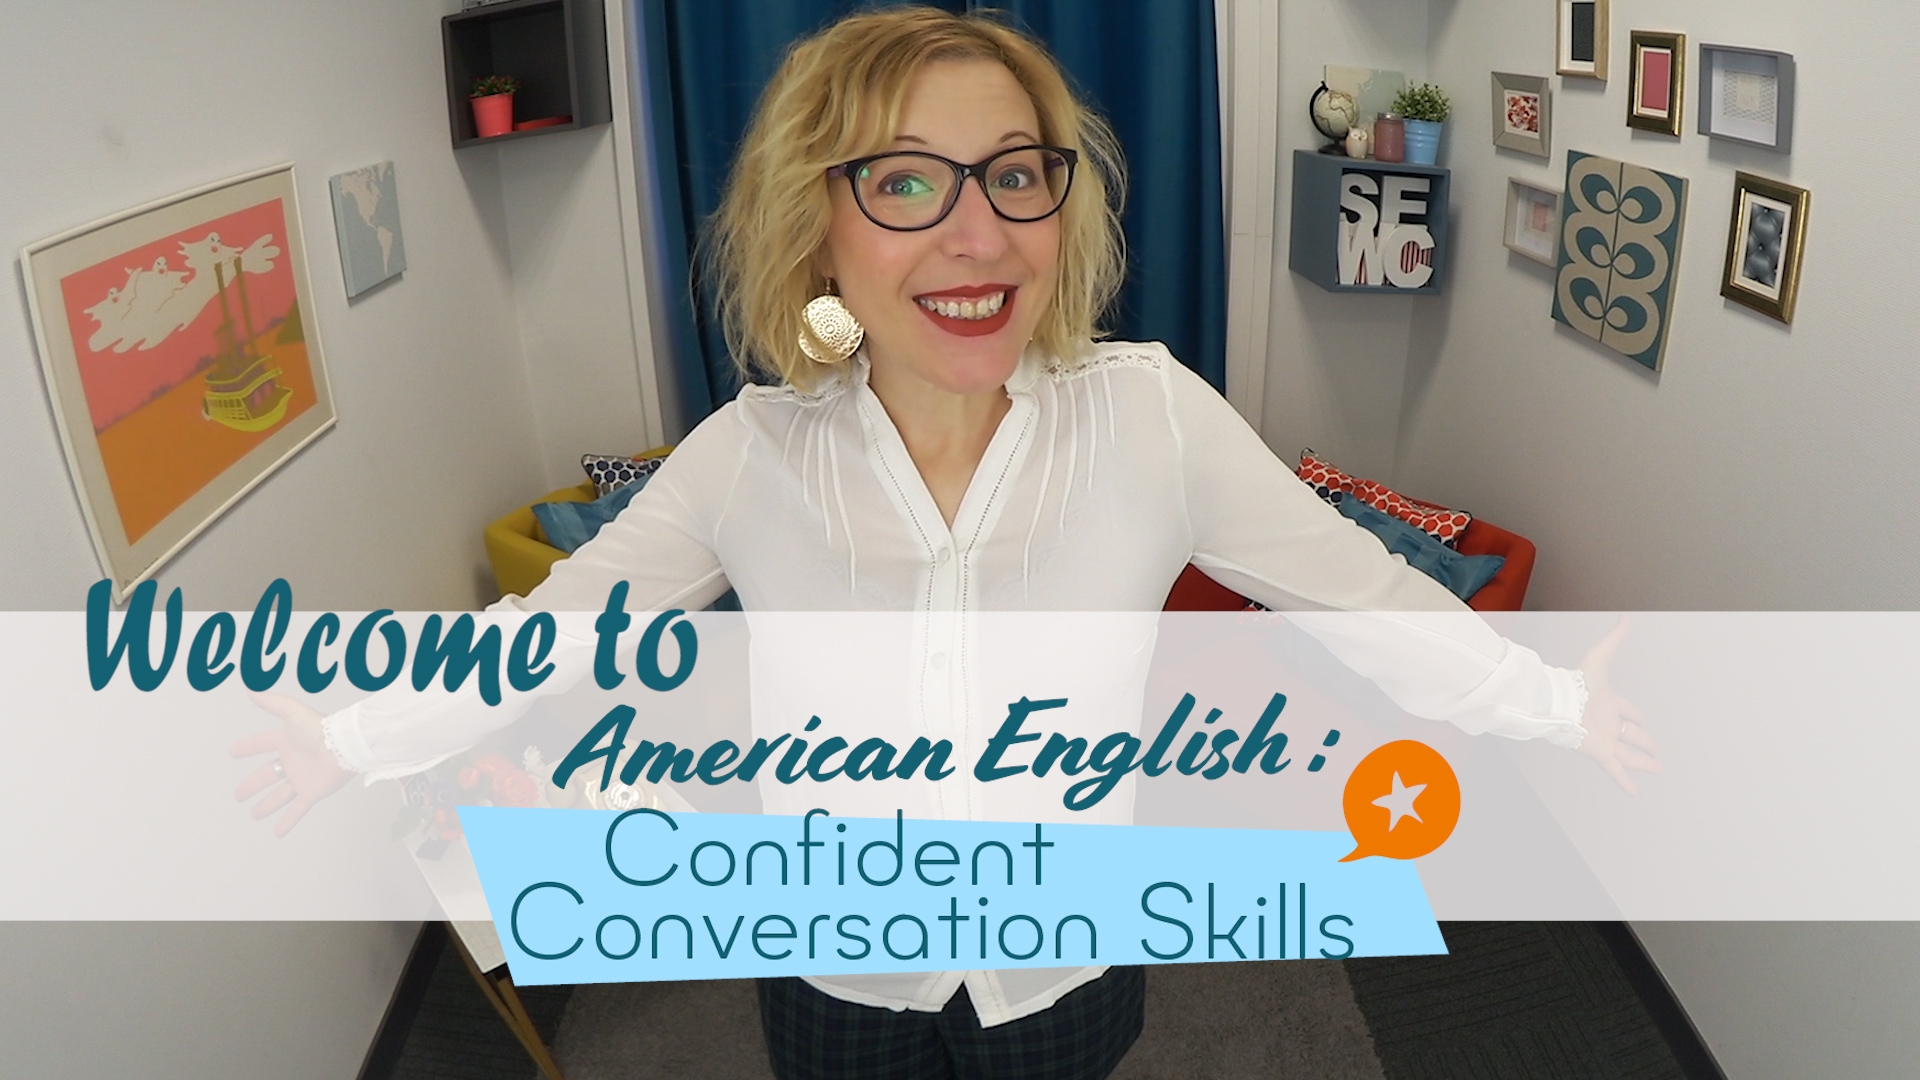 Confident Conversation Skills Course Offer